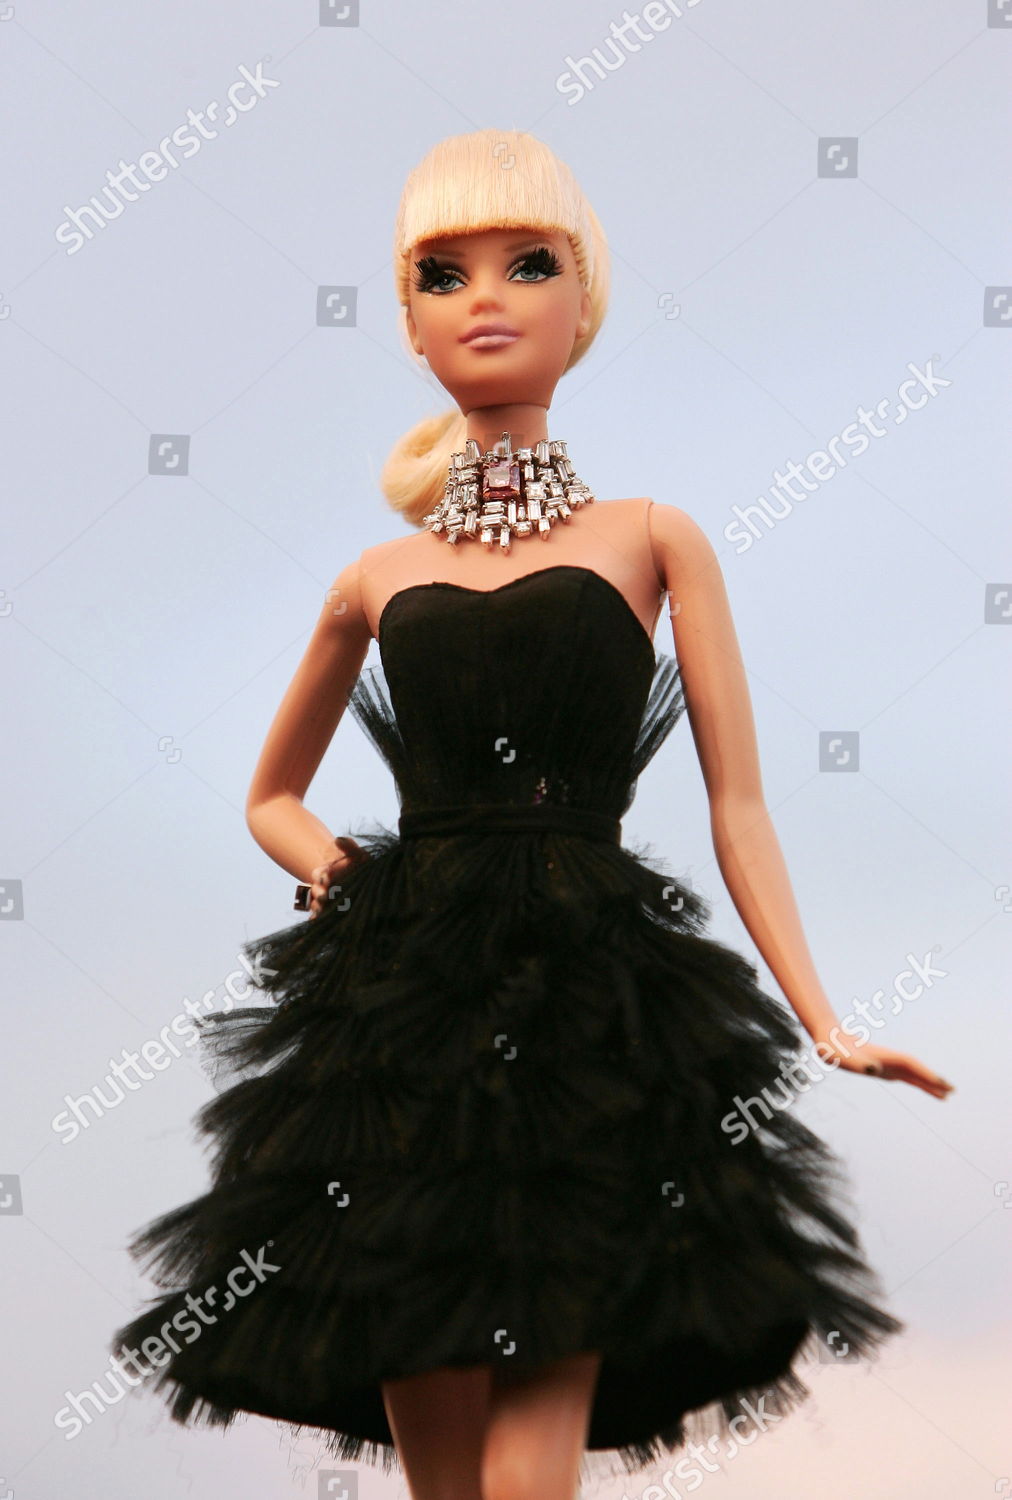 costliest barbie doll